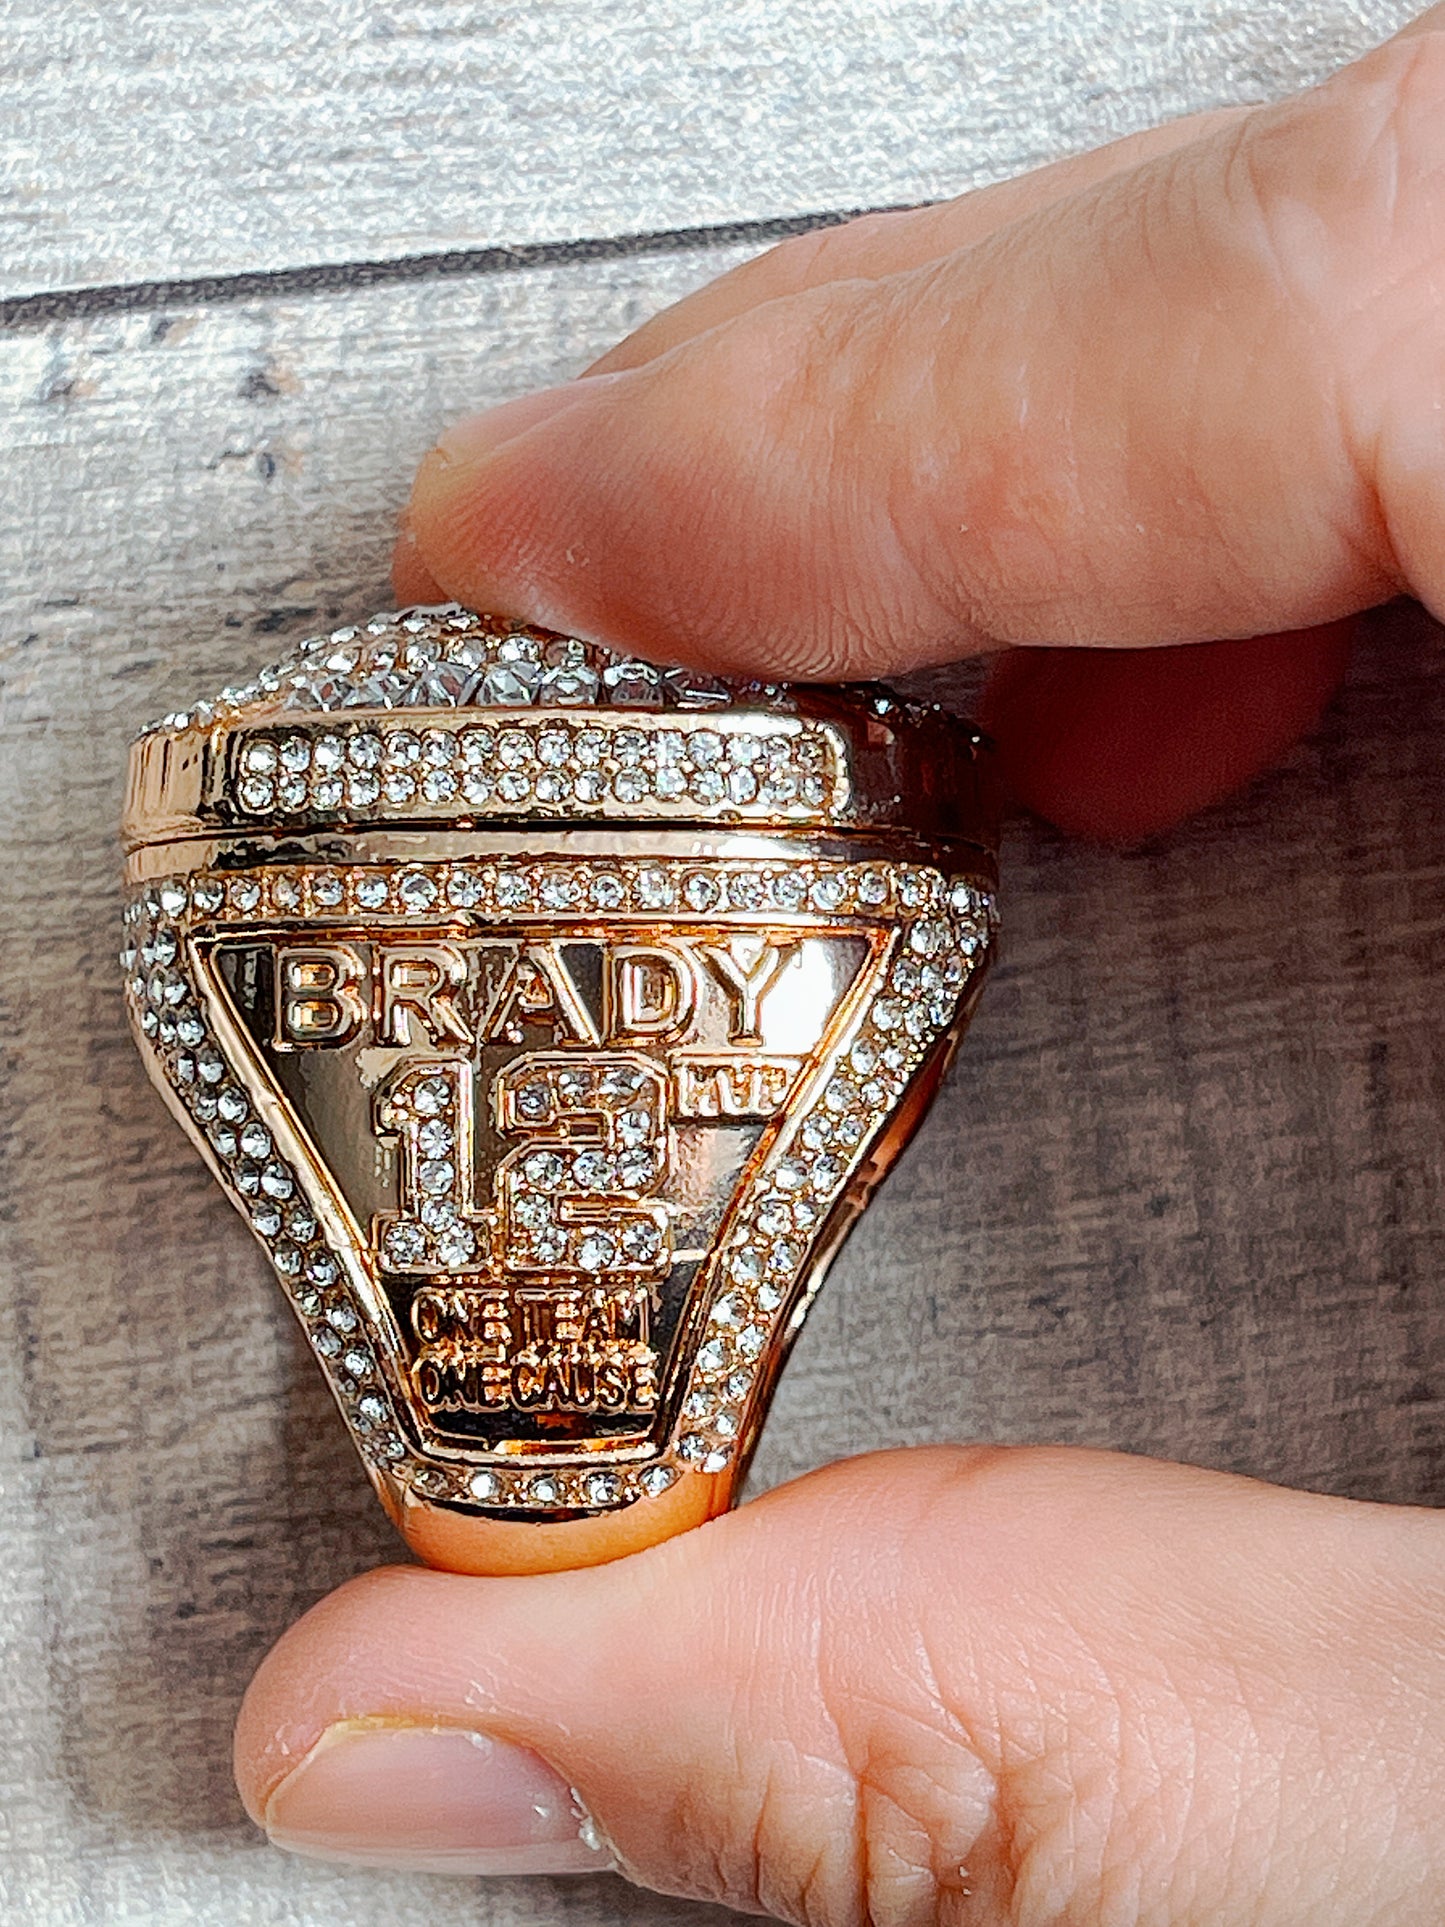 Champion ring|  2020 NFL Tampa Bay Buccaneers Champion ring